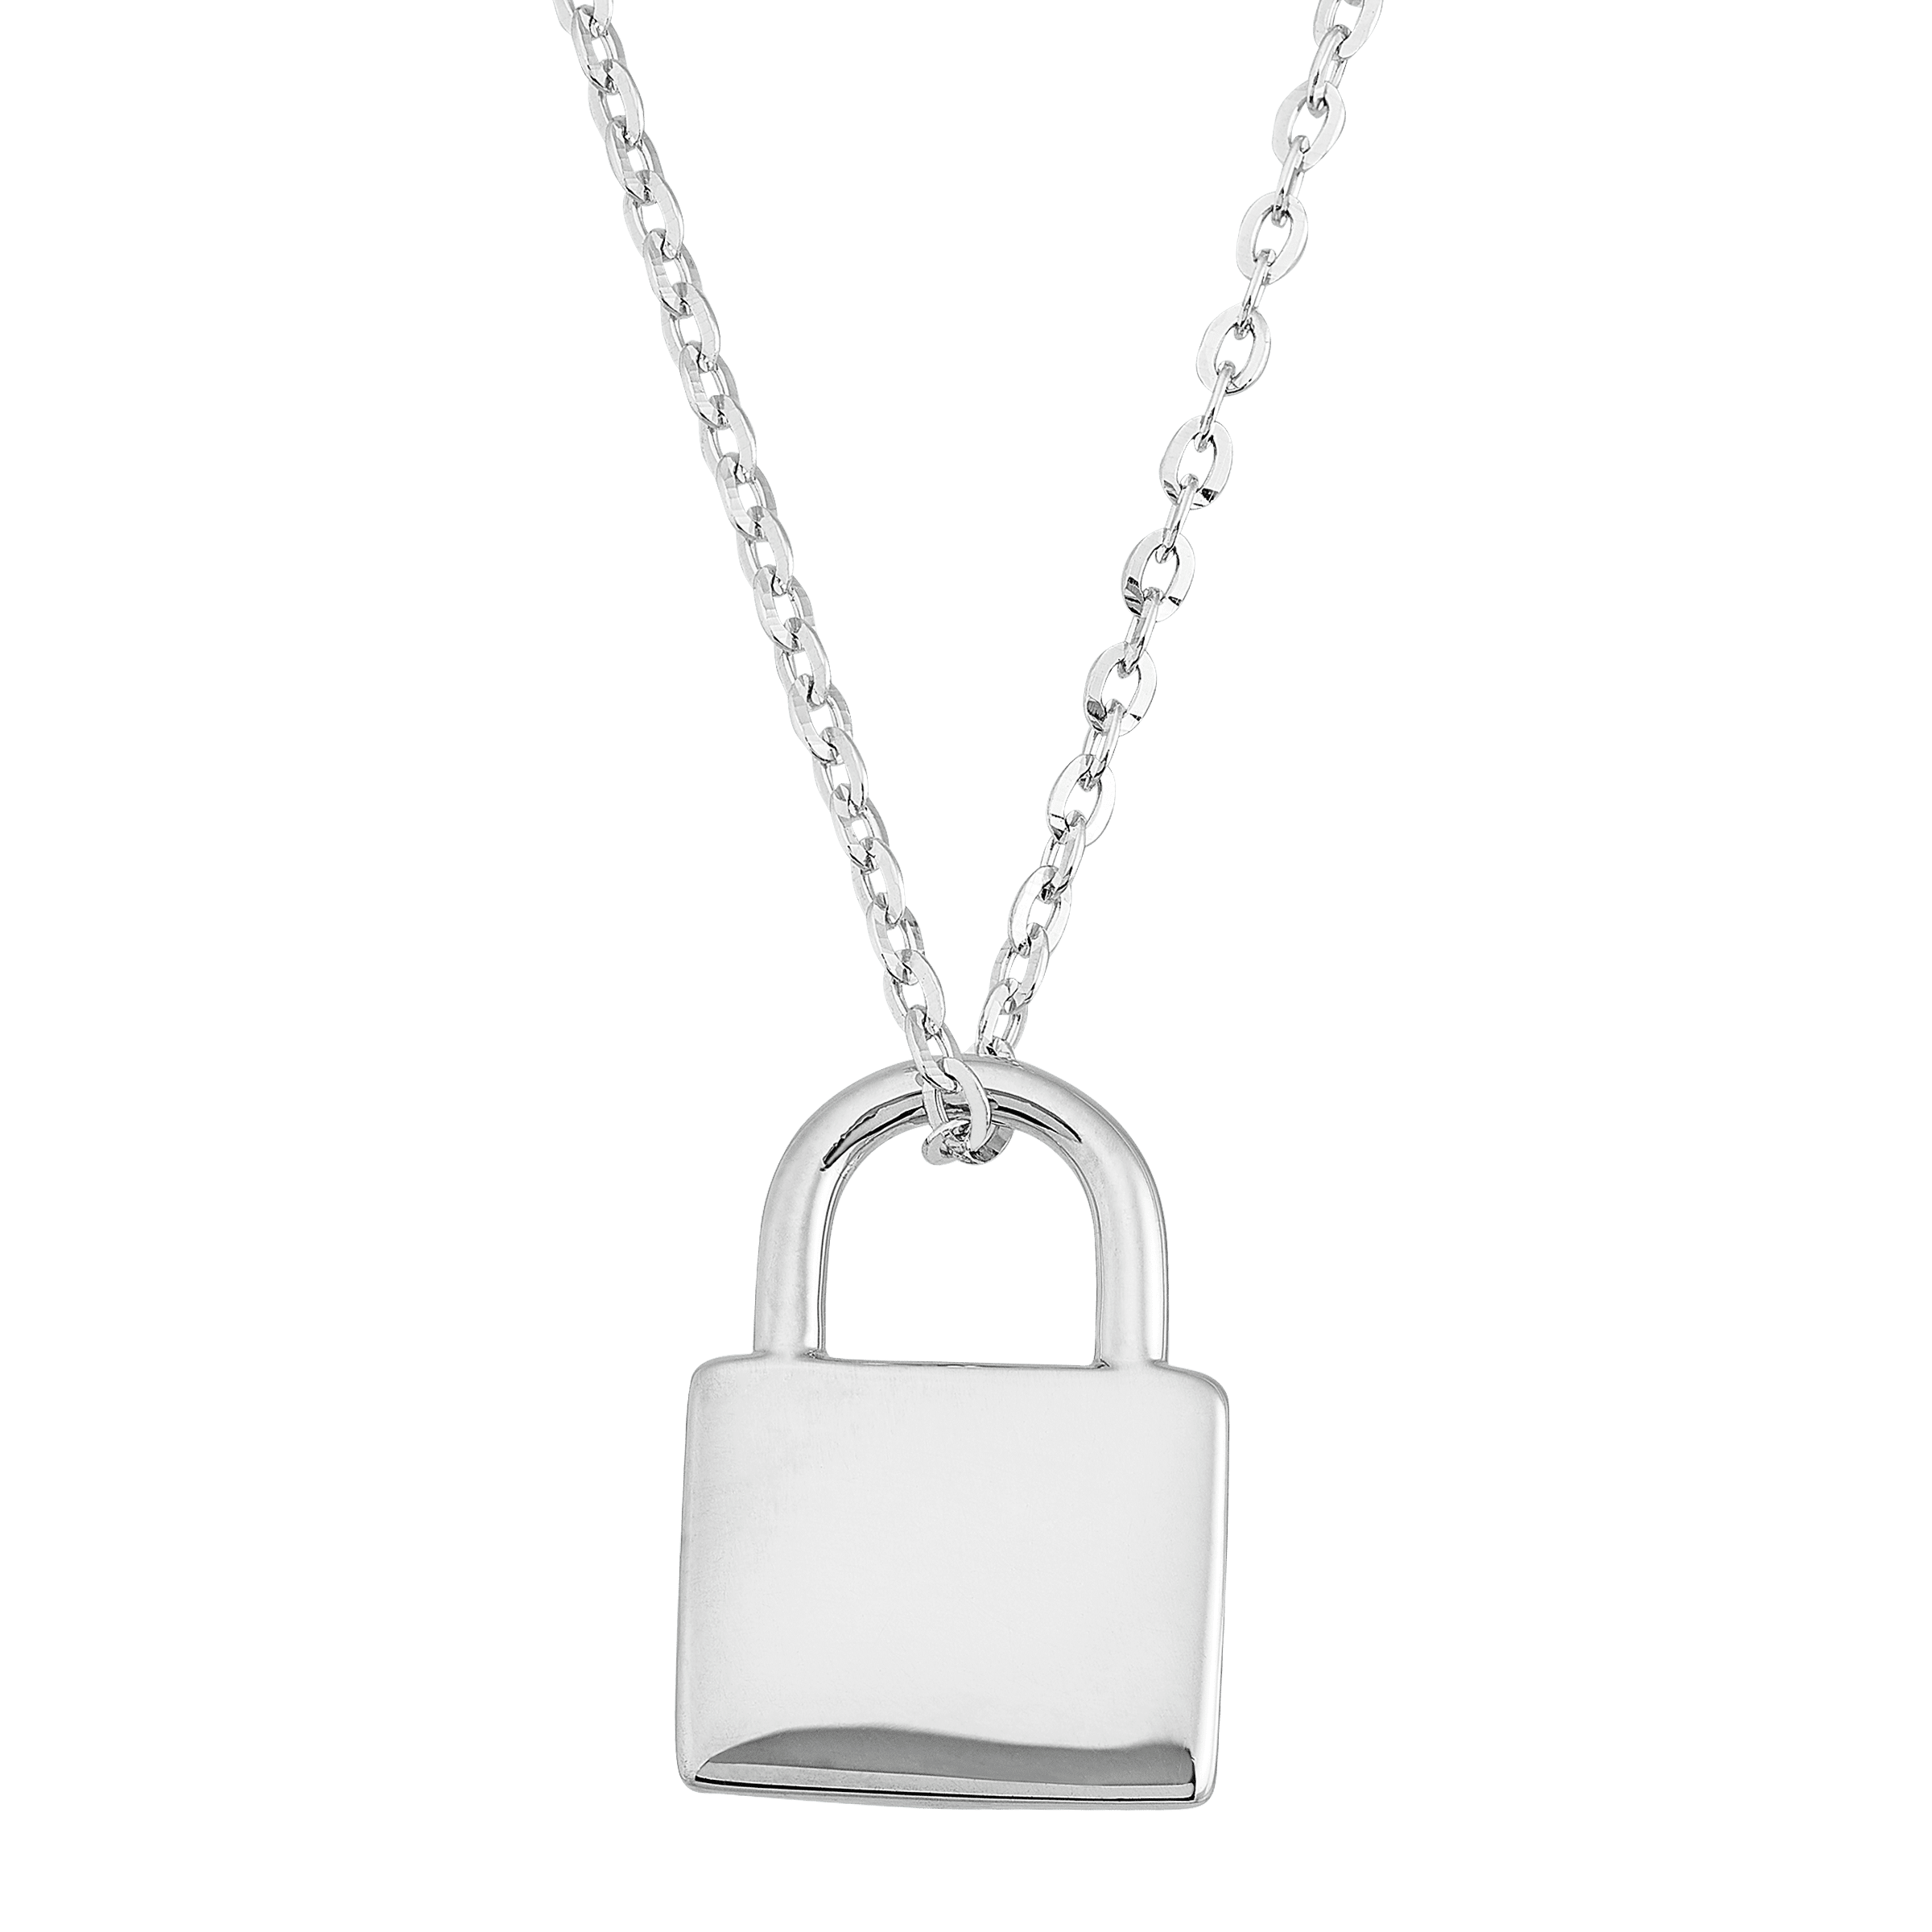 Personalized Initial N Lovers Padlock Lock Pendant Necklace Silver -  Walmart.com